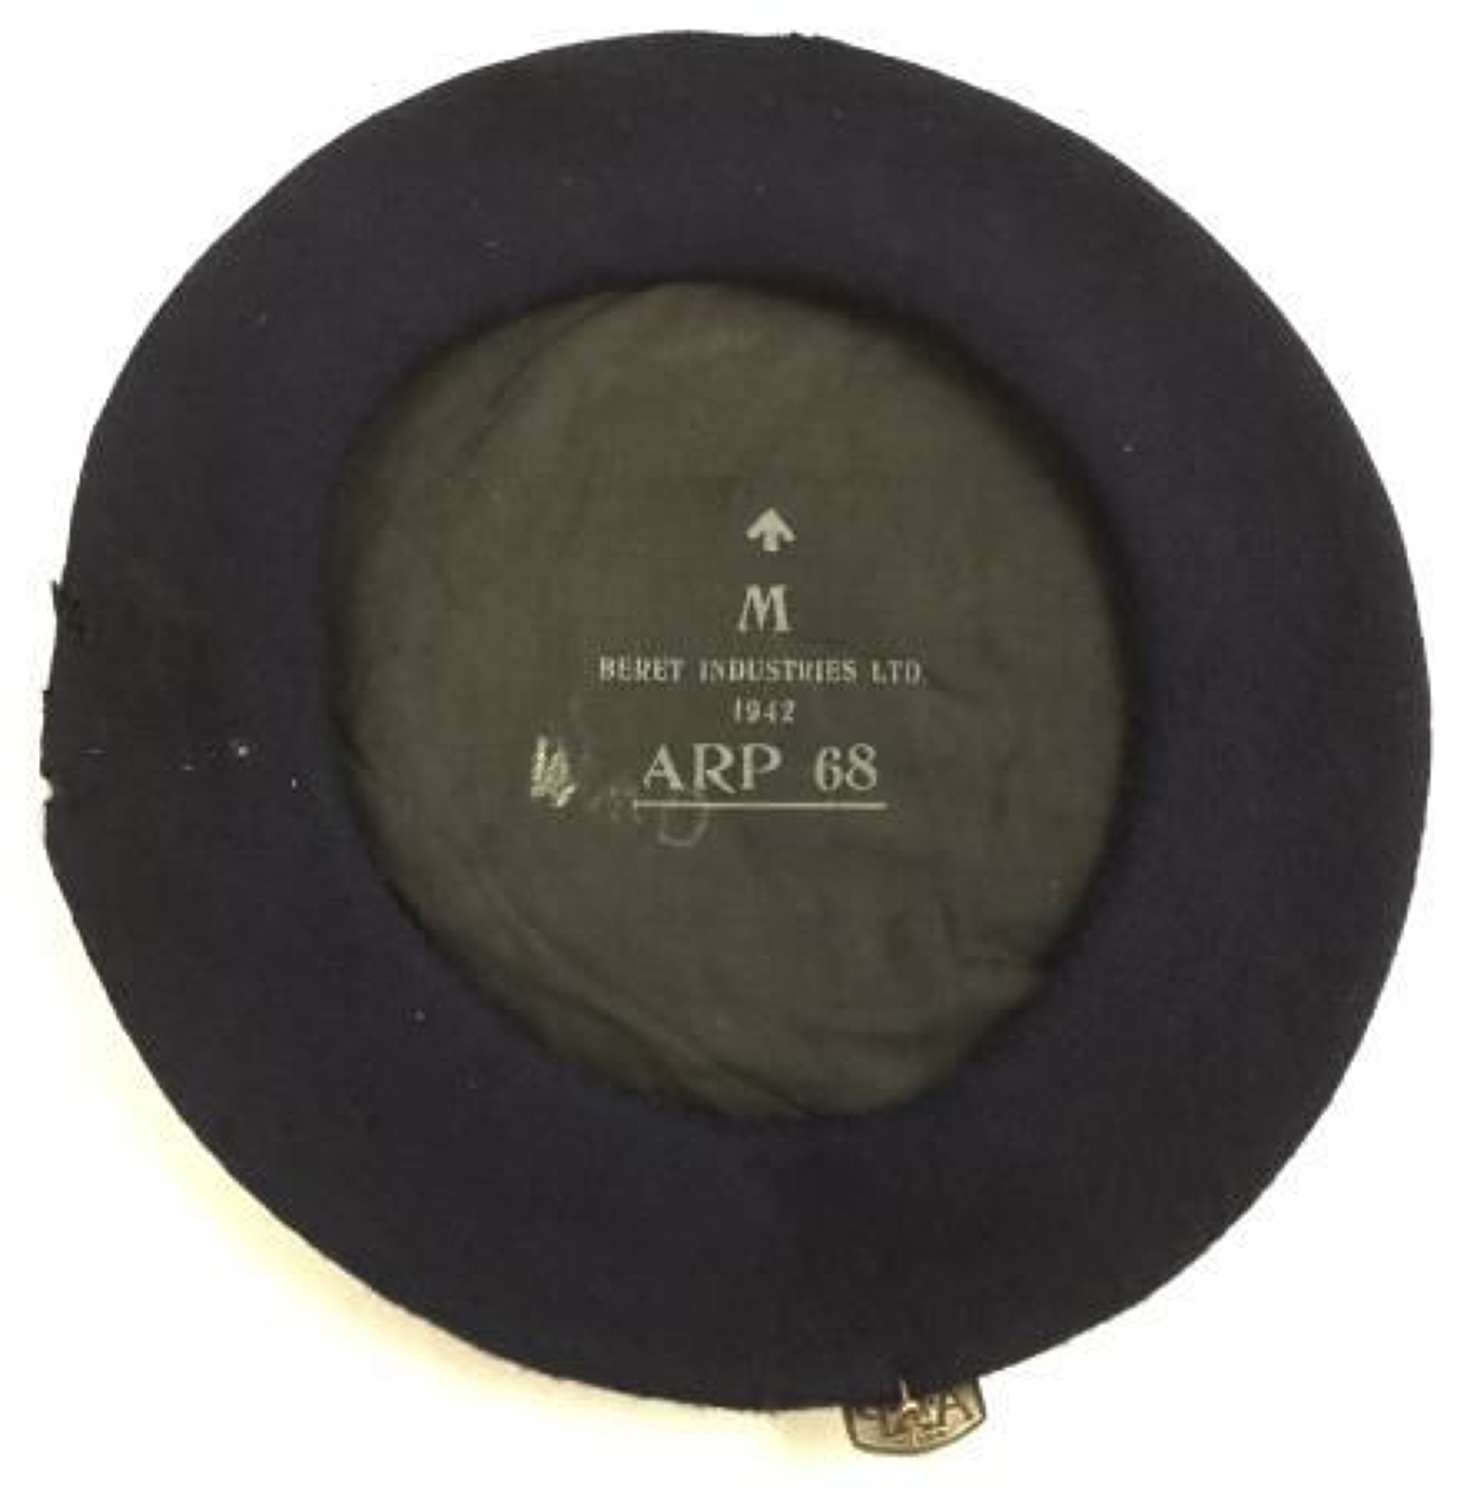 Orignal 1942 Dated ARP 68 Beret + Badge